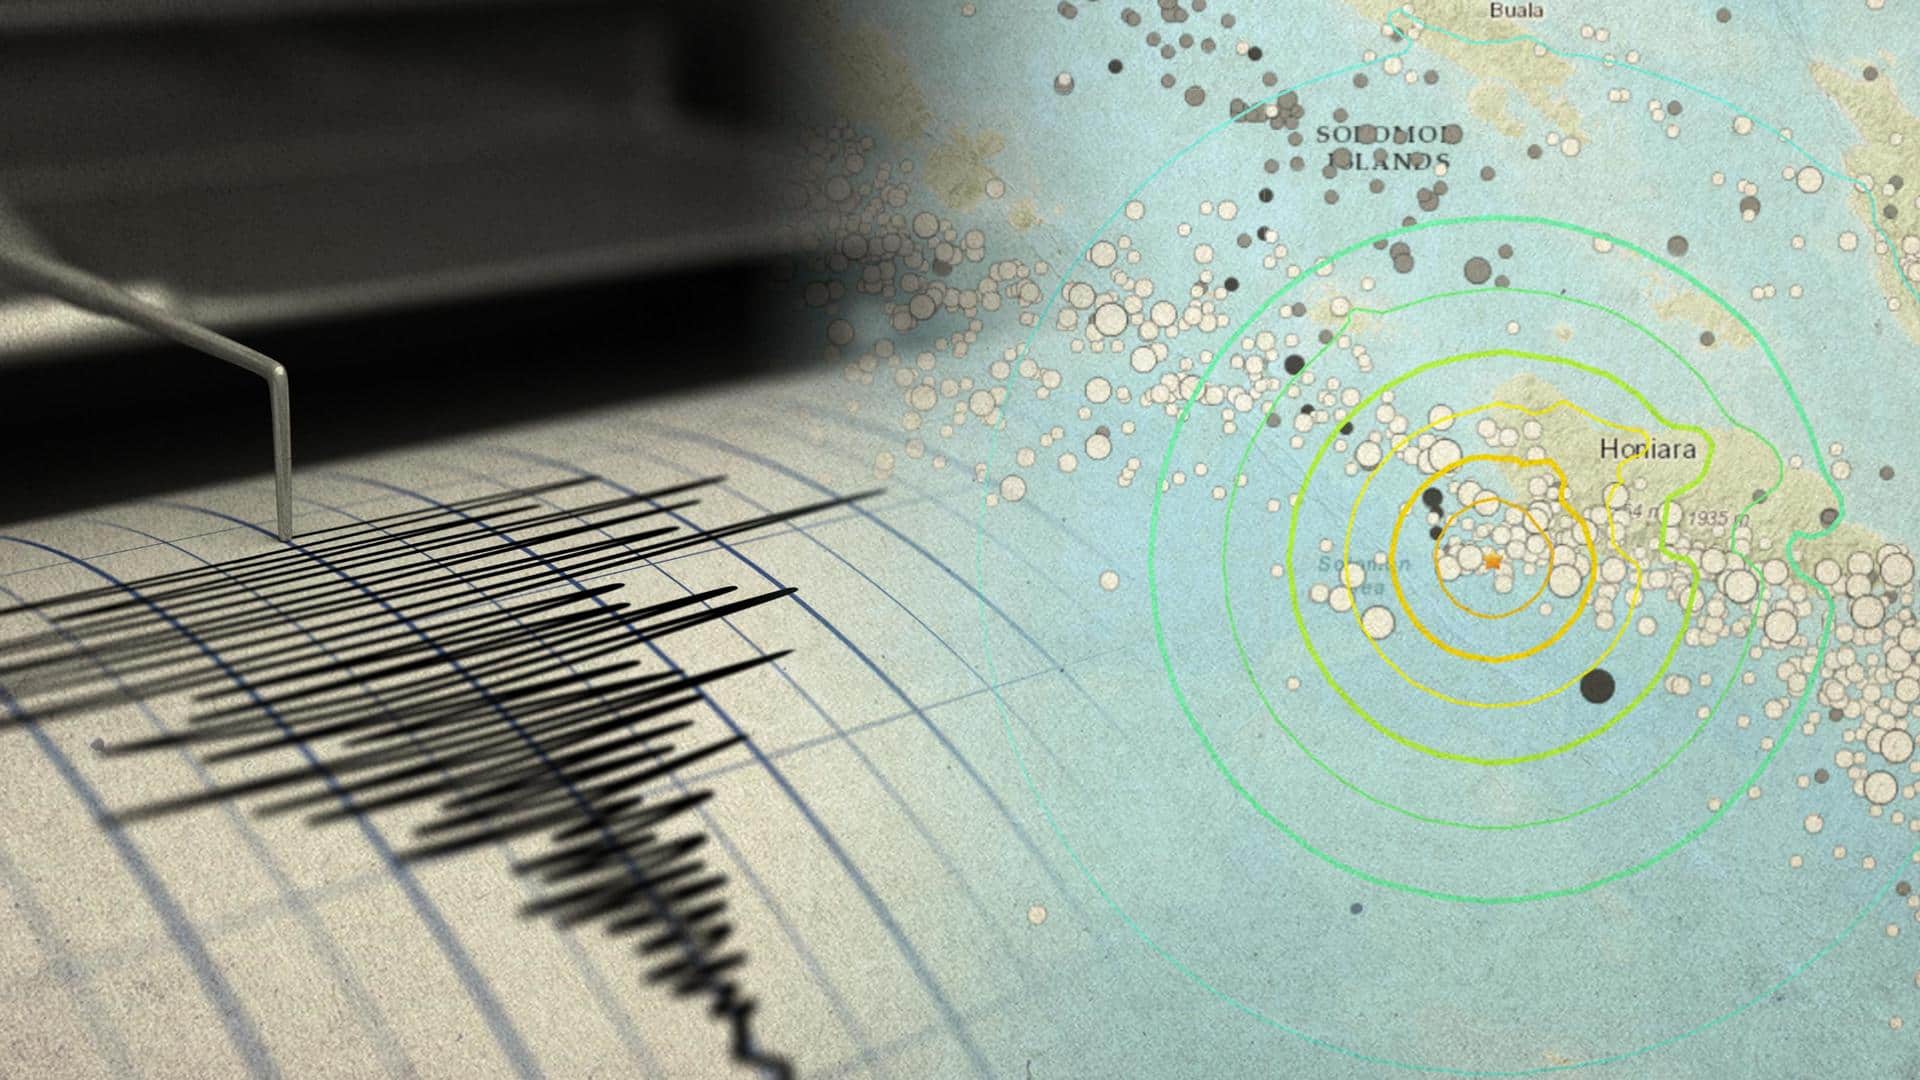 Powerful 7.0-magnitude earthquake hits Solomon Islands; no tsunami warning issued